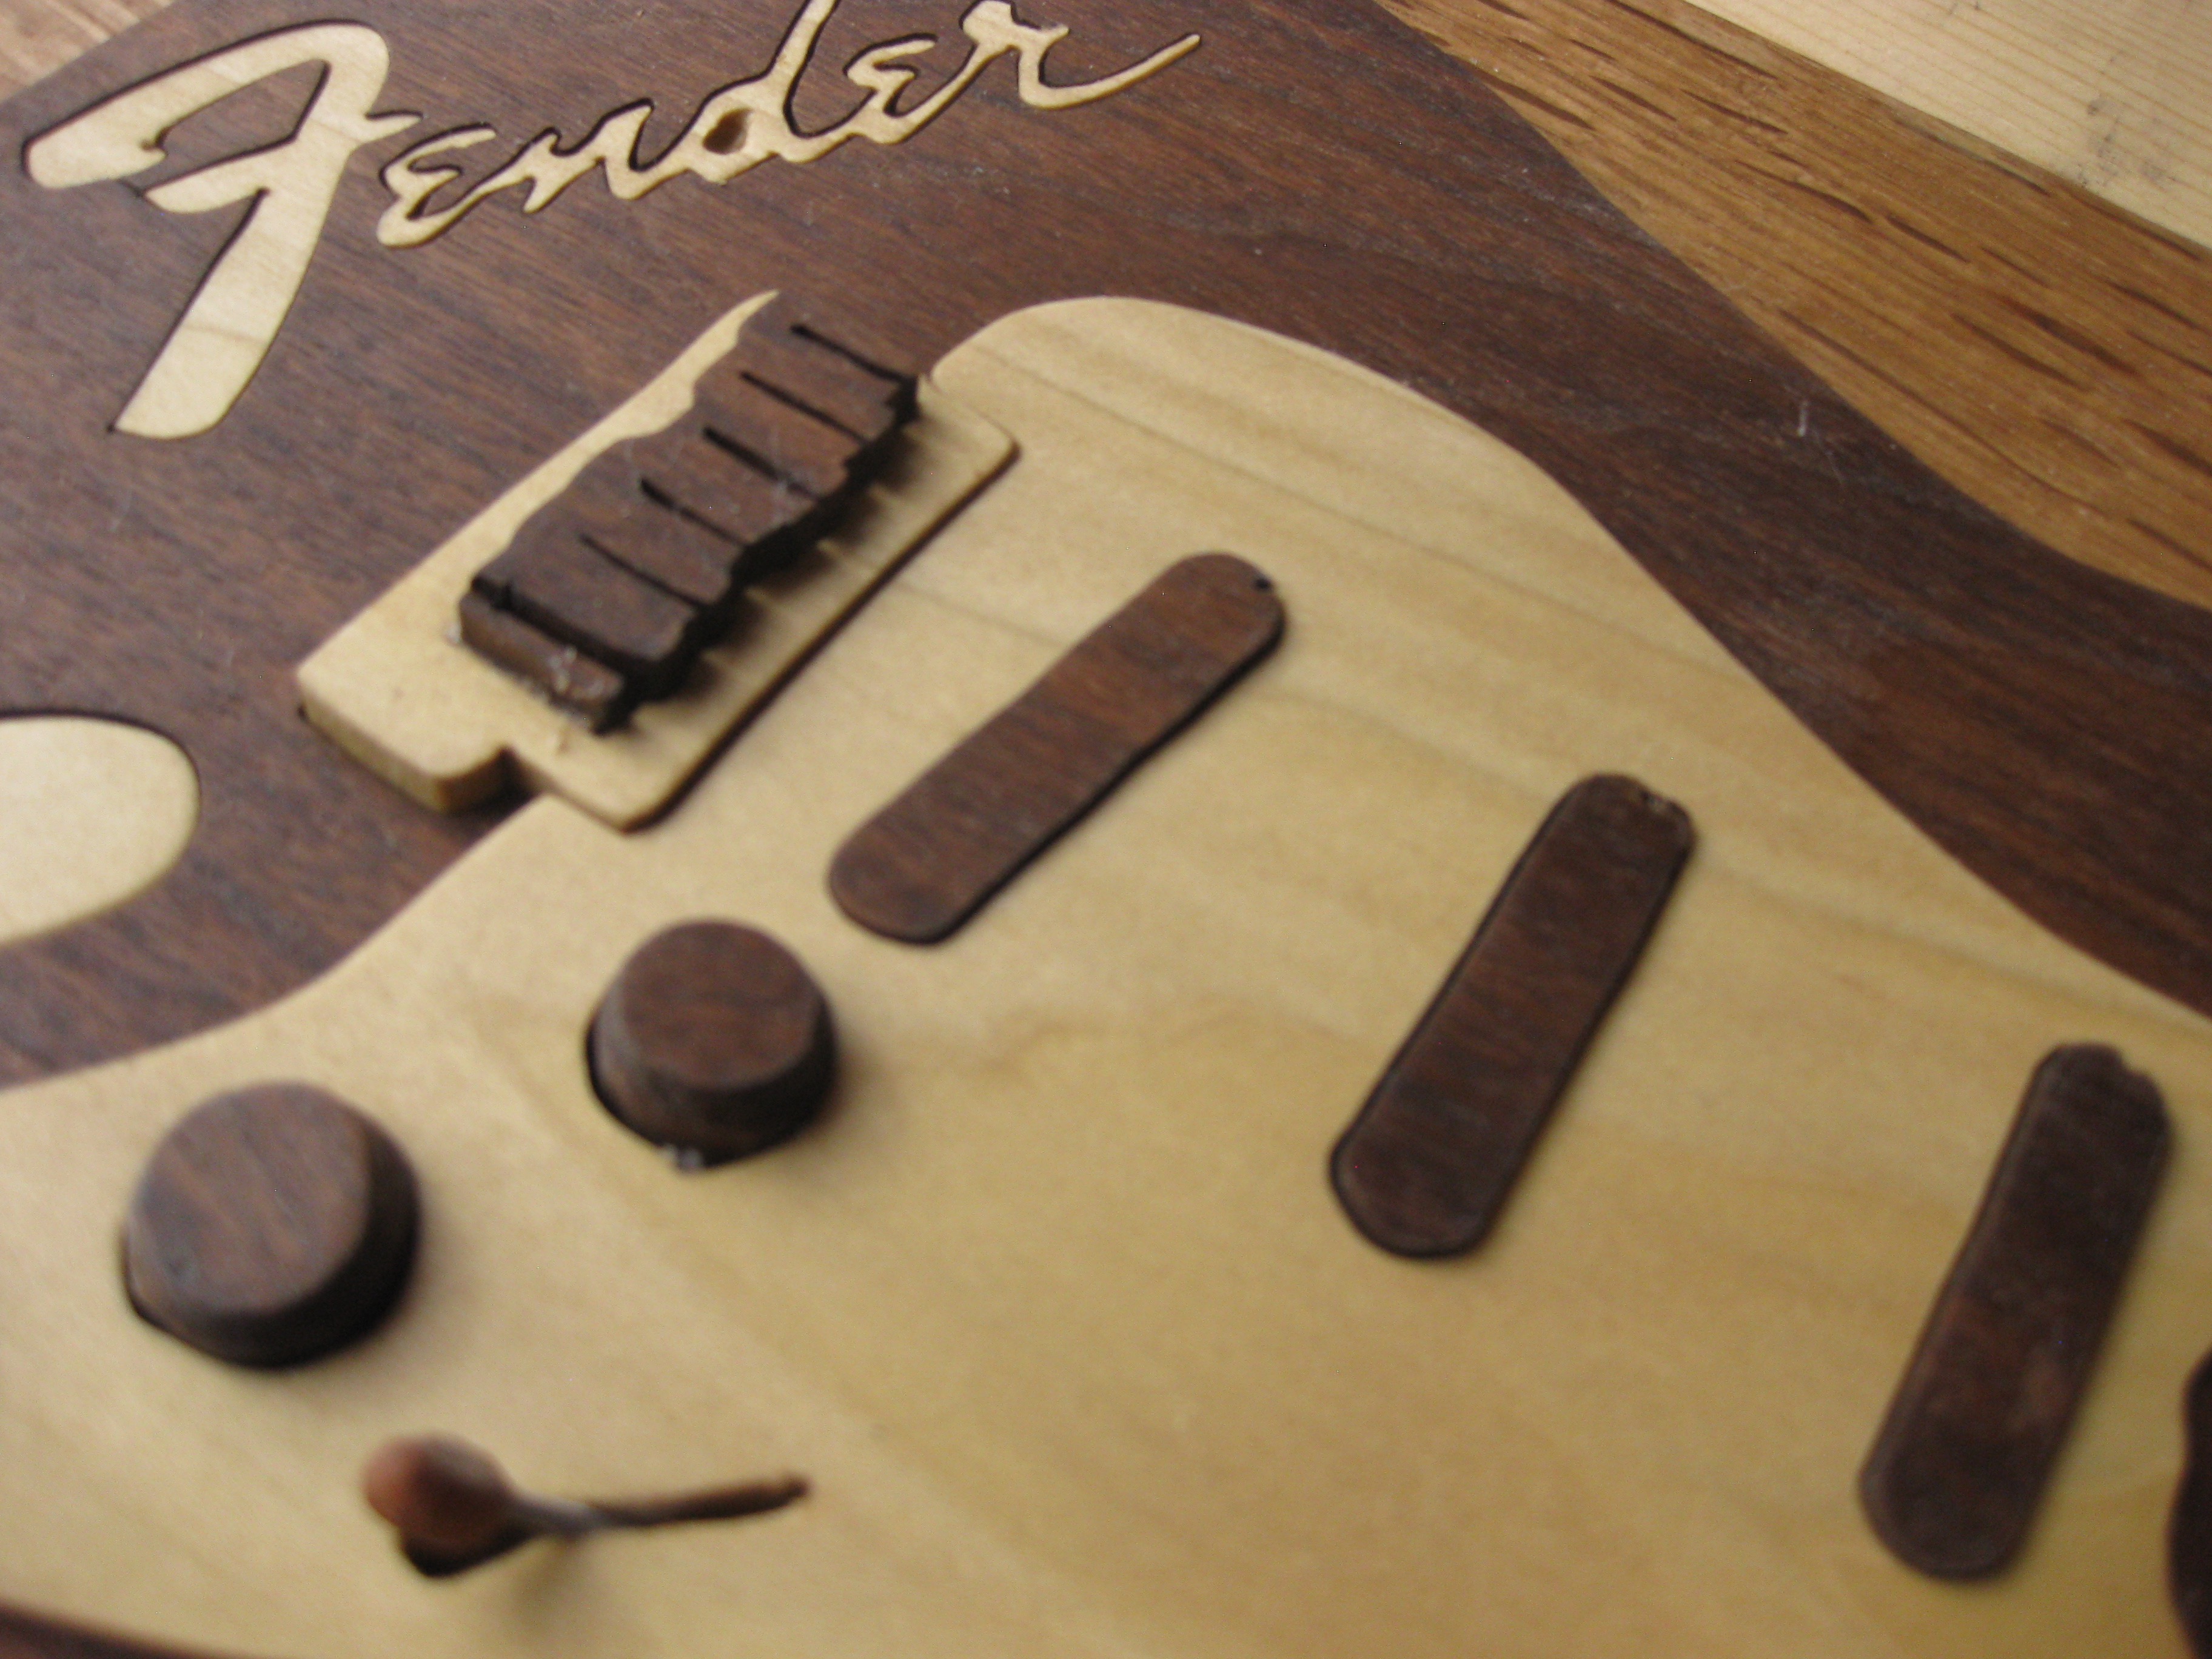 Close-up of Fender Guitar Art Puzzle